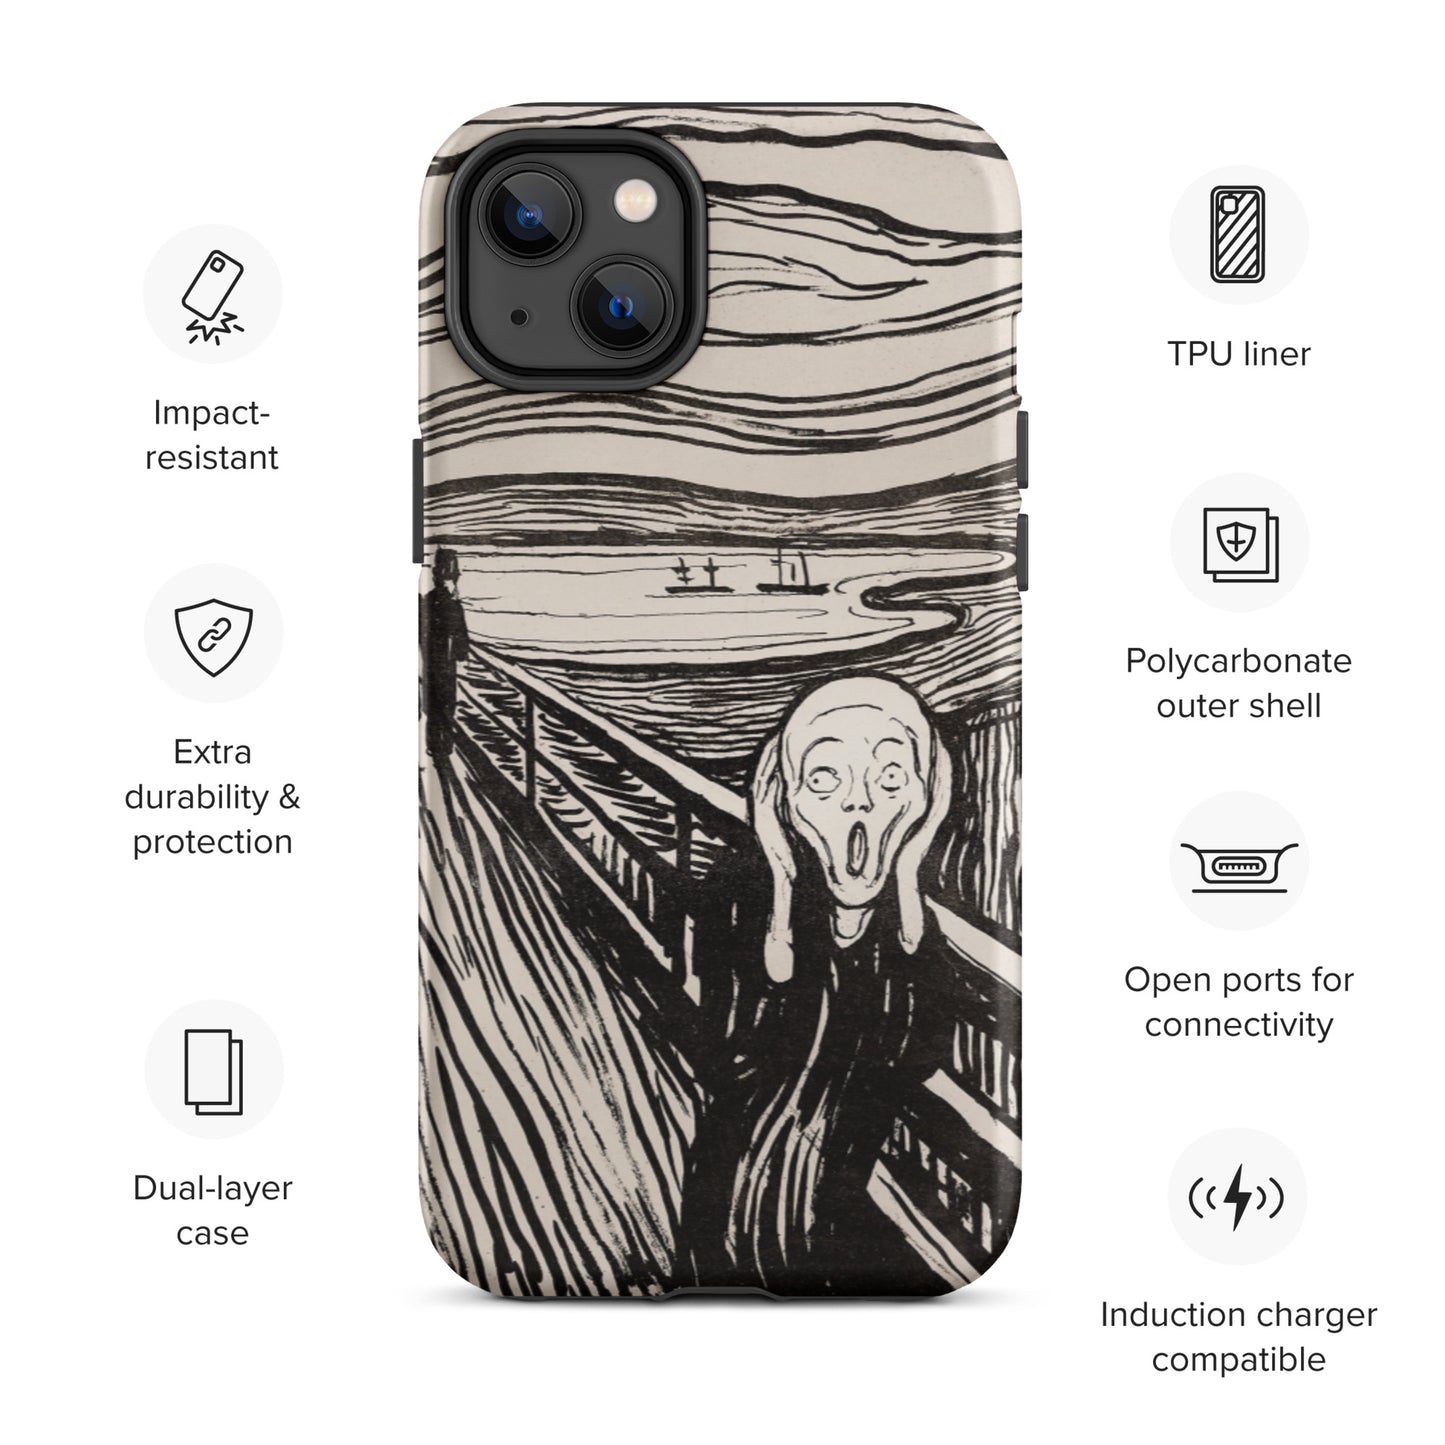 Scream - Tough iPhone case